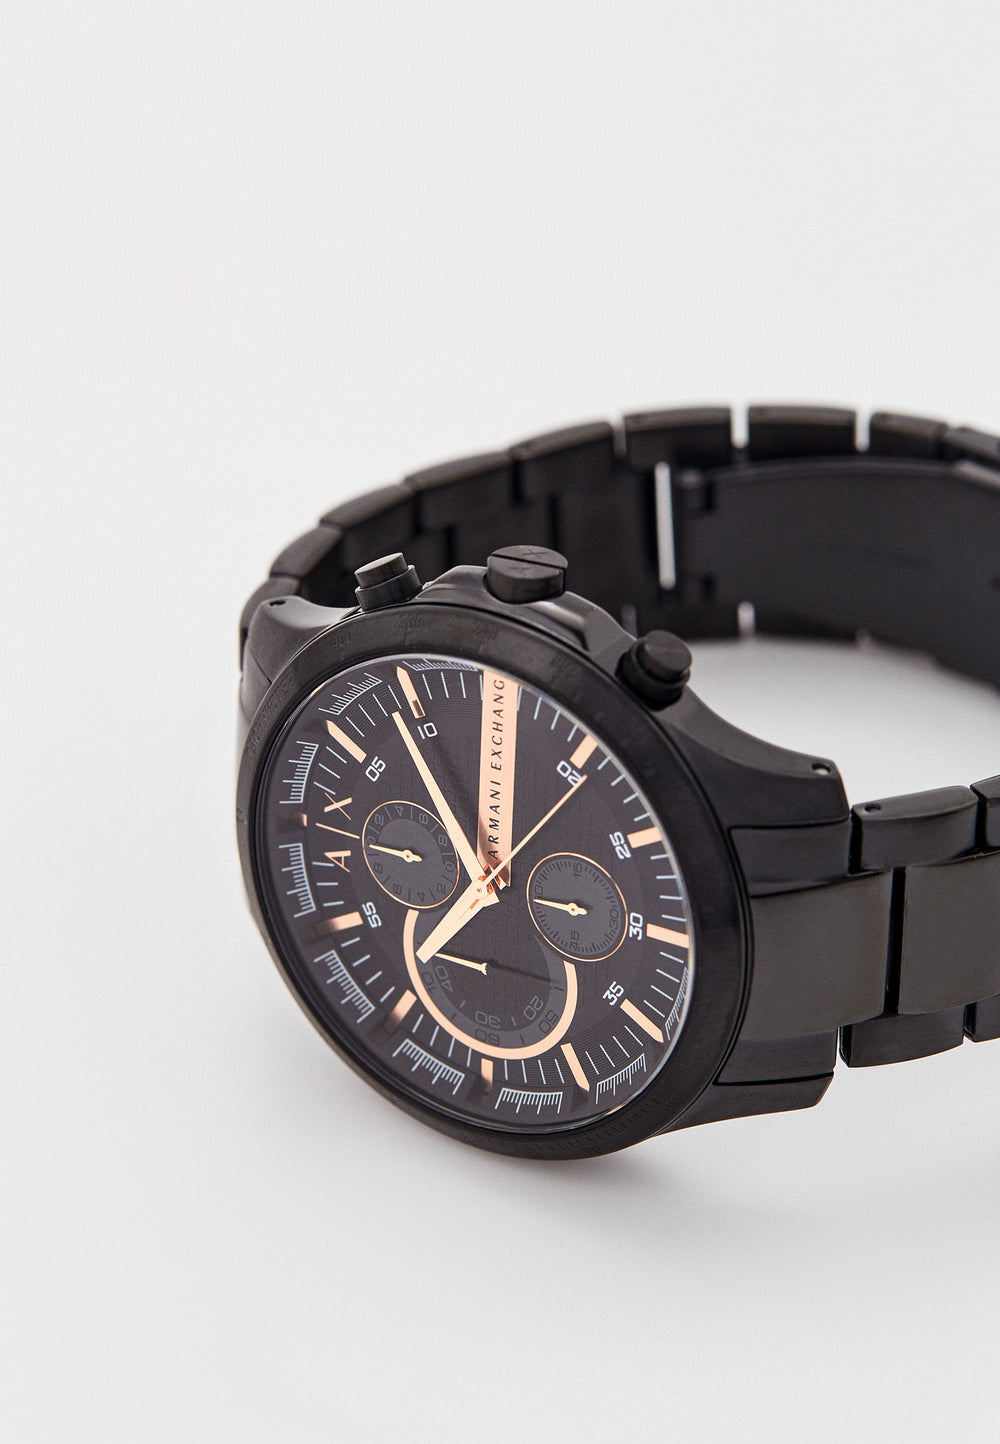 Dial Black Watch of AX24 – Classic Men\'s Exchange Chronograph Armani Watches Quartz America